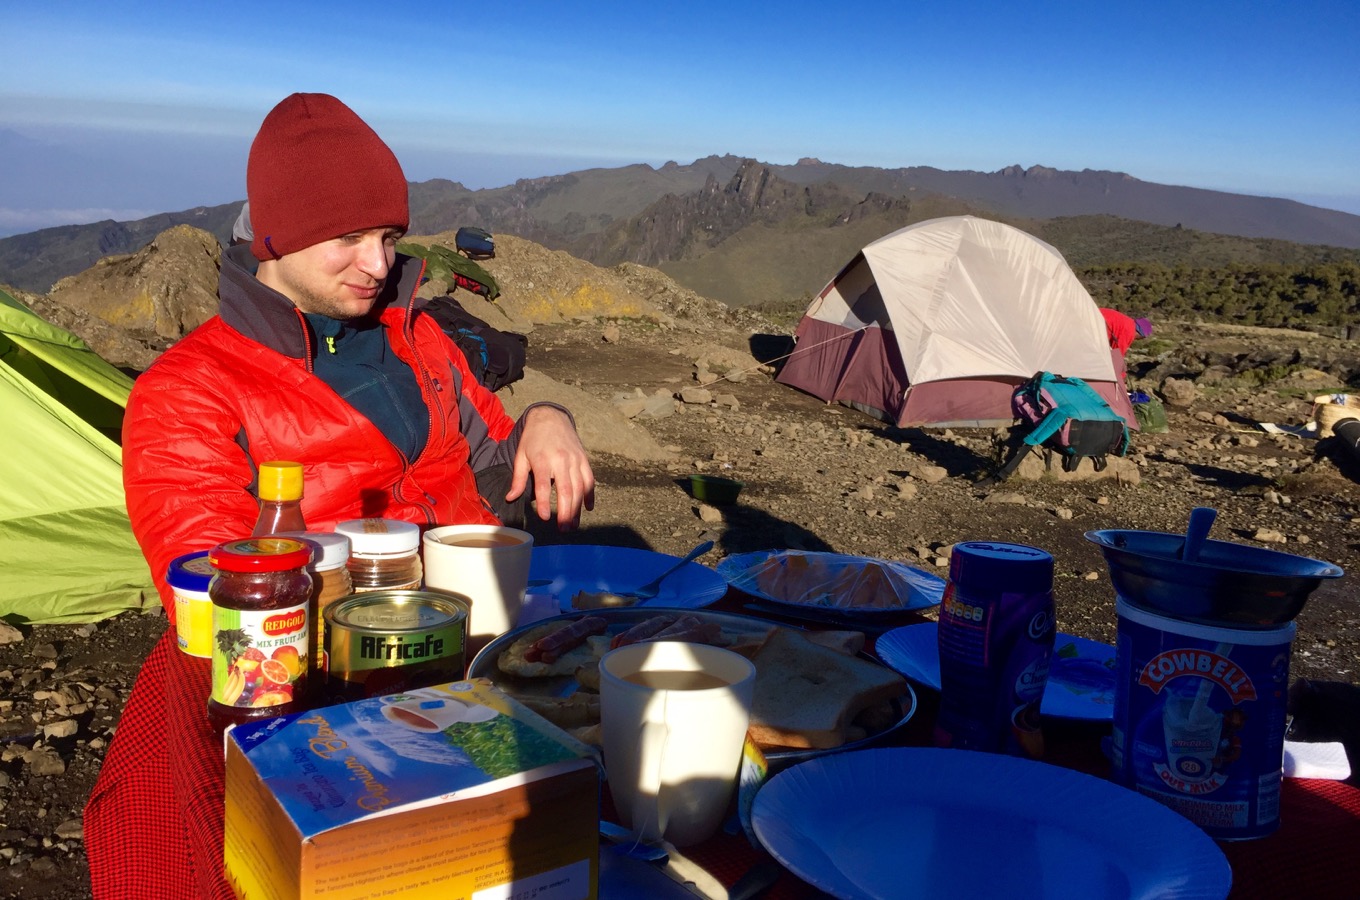 Breakfast at Kilimanjaro in a camp